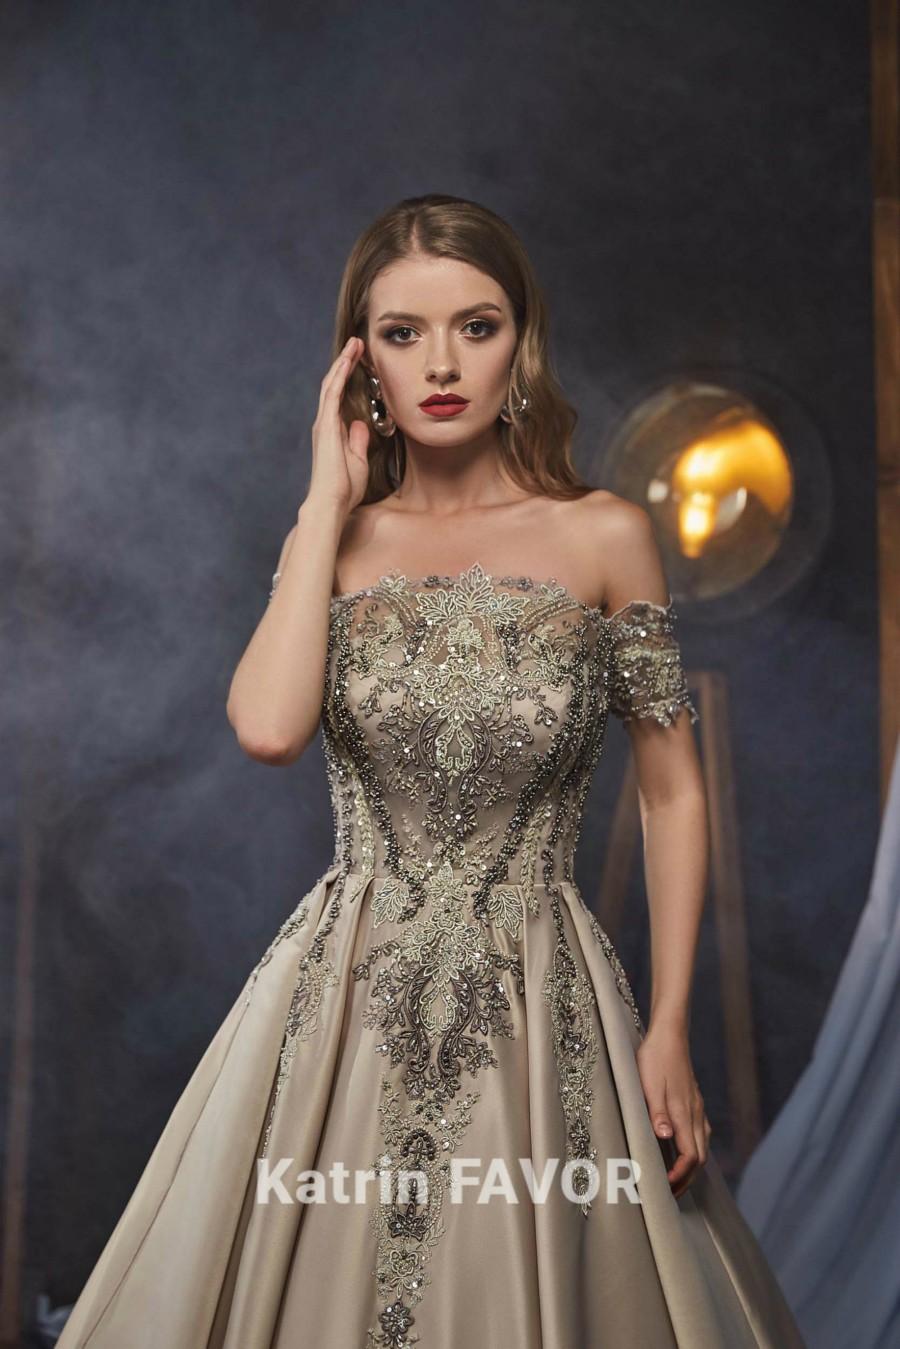 زفاف - Evening Gown Prom Dress Long Off Shoulder Dress Lace Dress Beaded Dress Ball Gown Alternative Wedding Dress Corset Dress Plus Size Maxi 2020